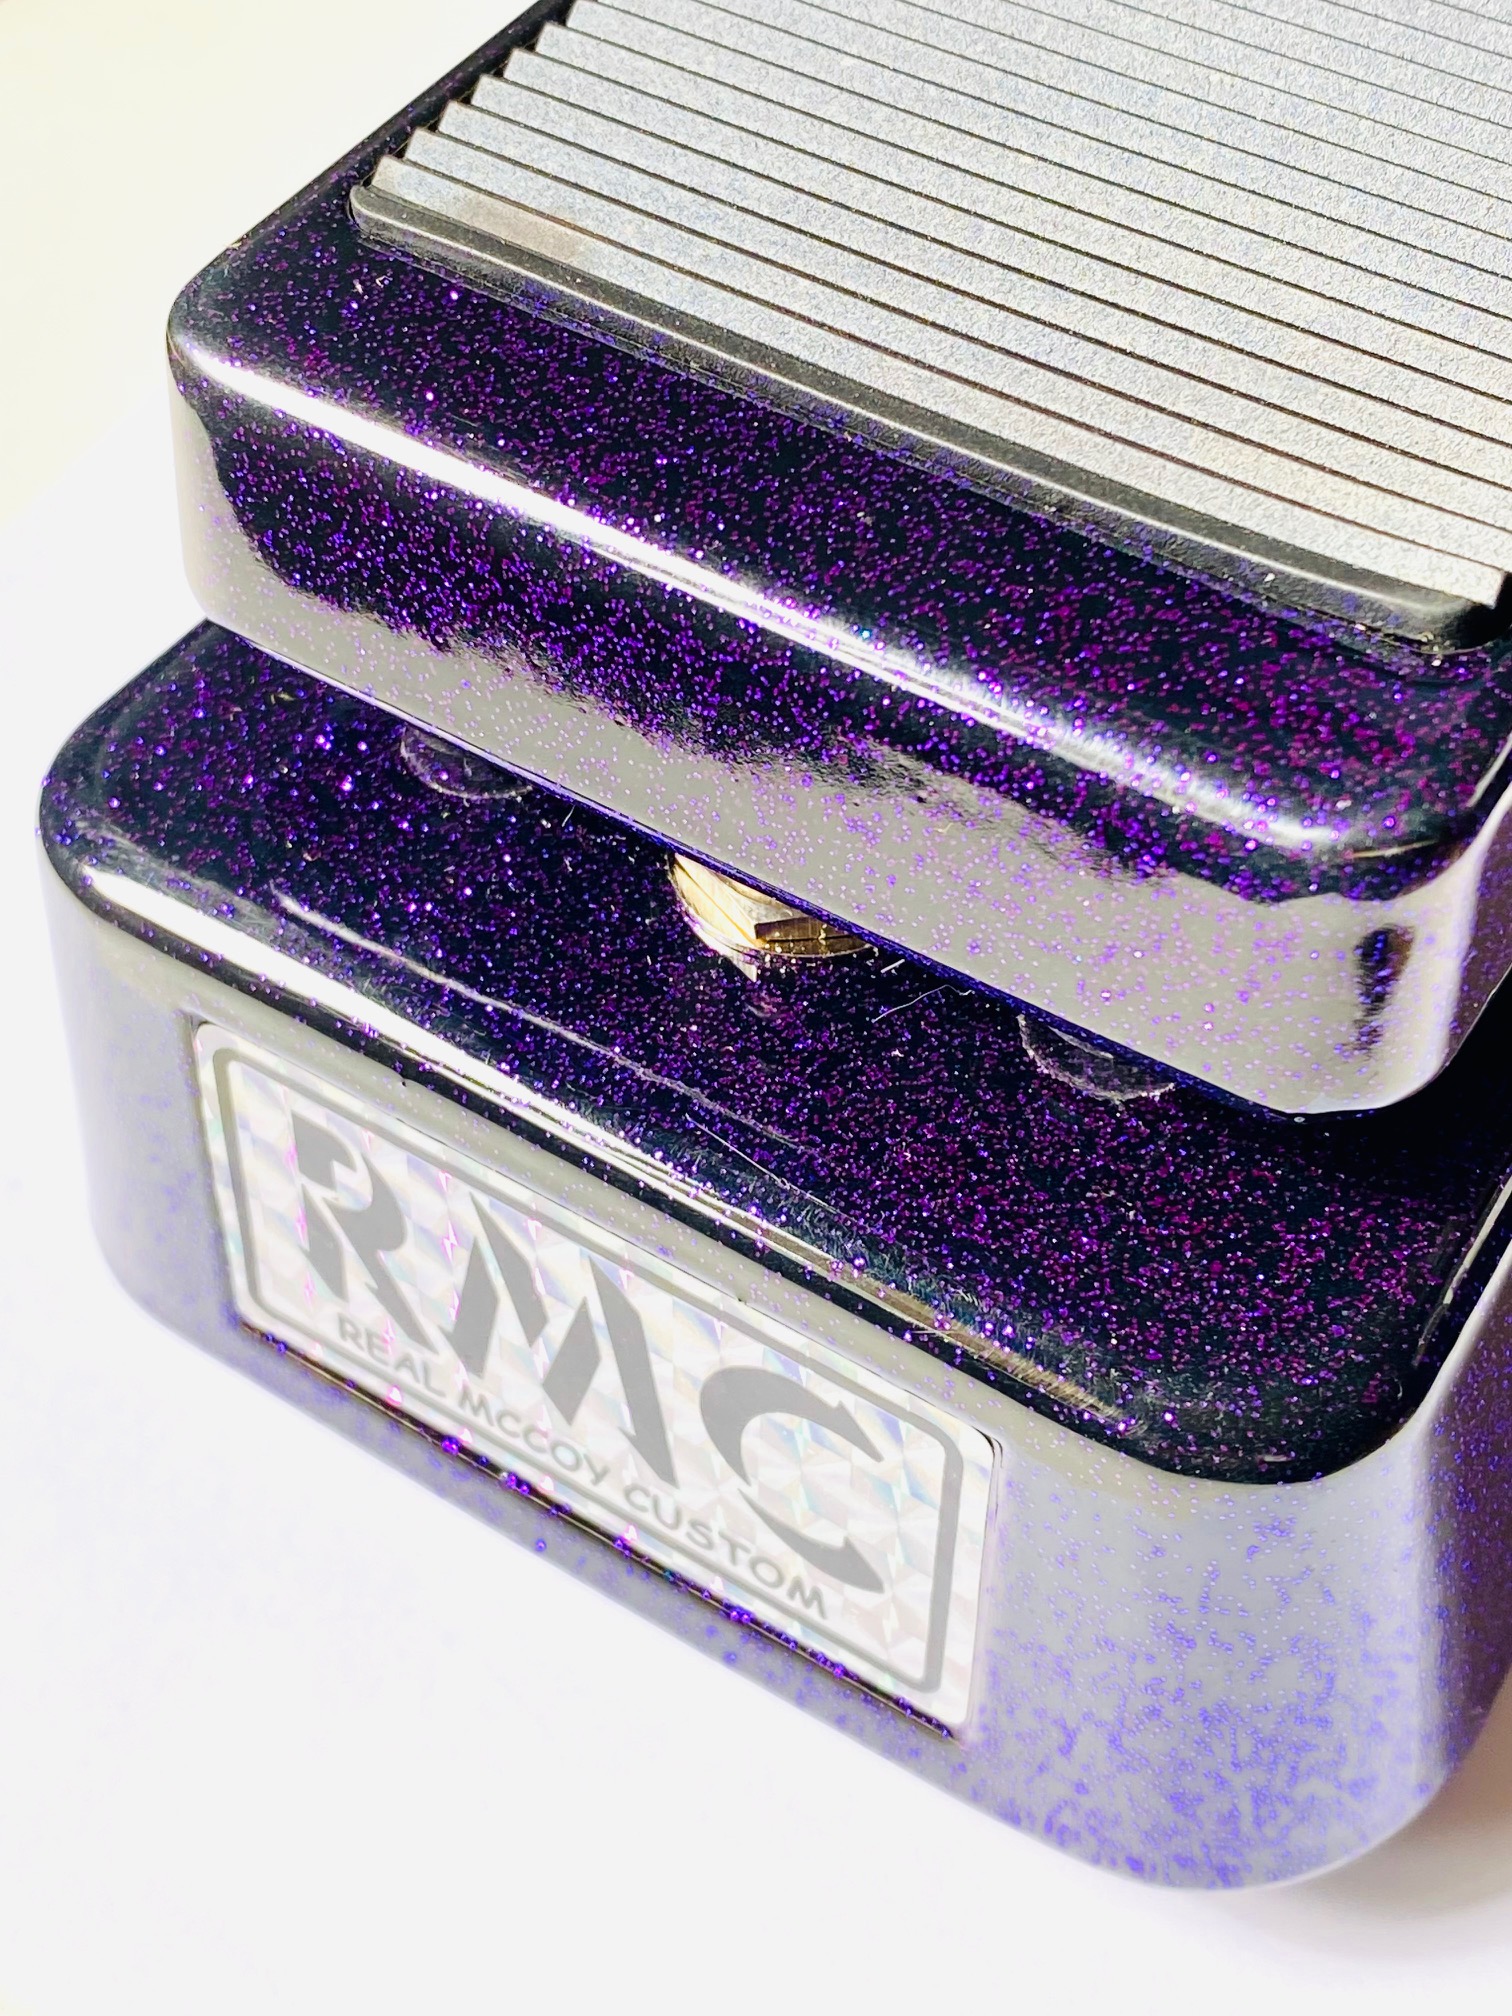 Real McCoy RMC11 Purple Sparkle